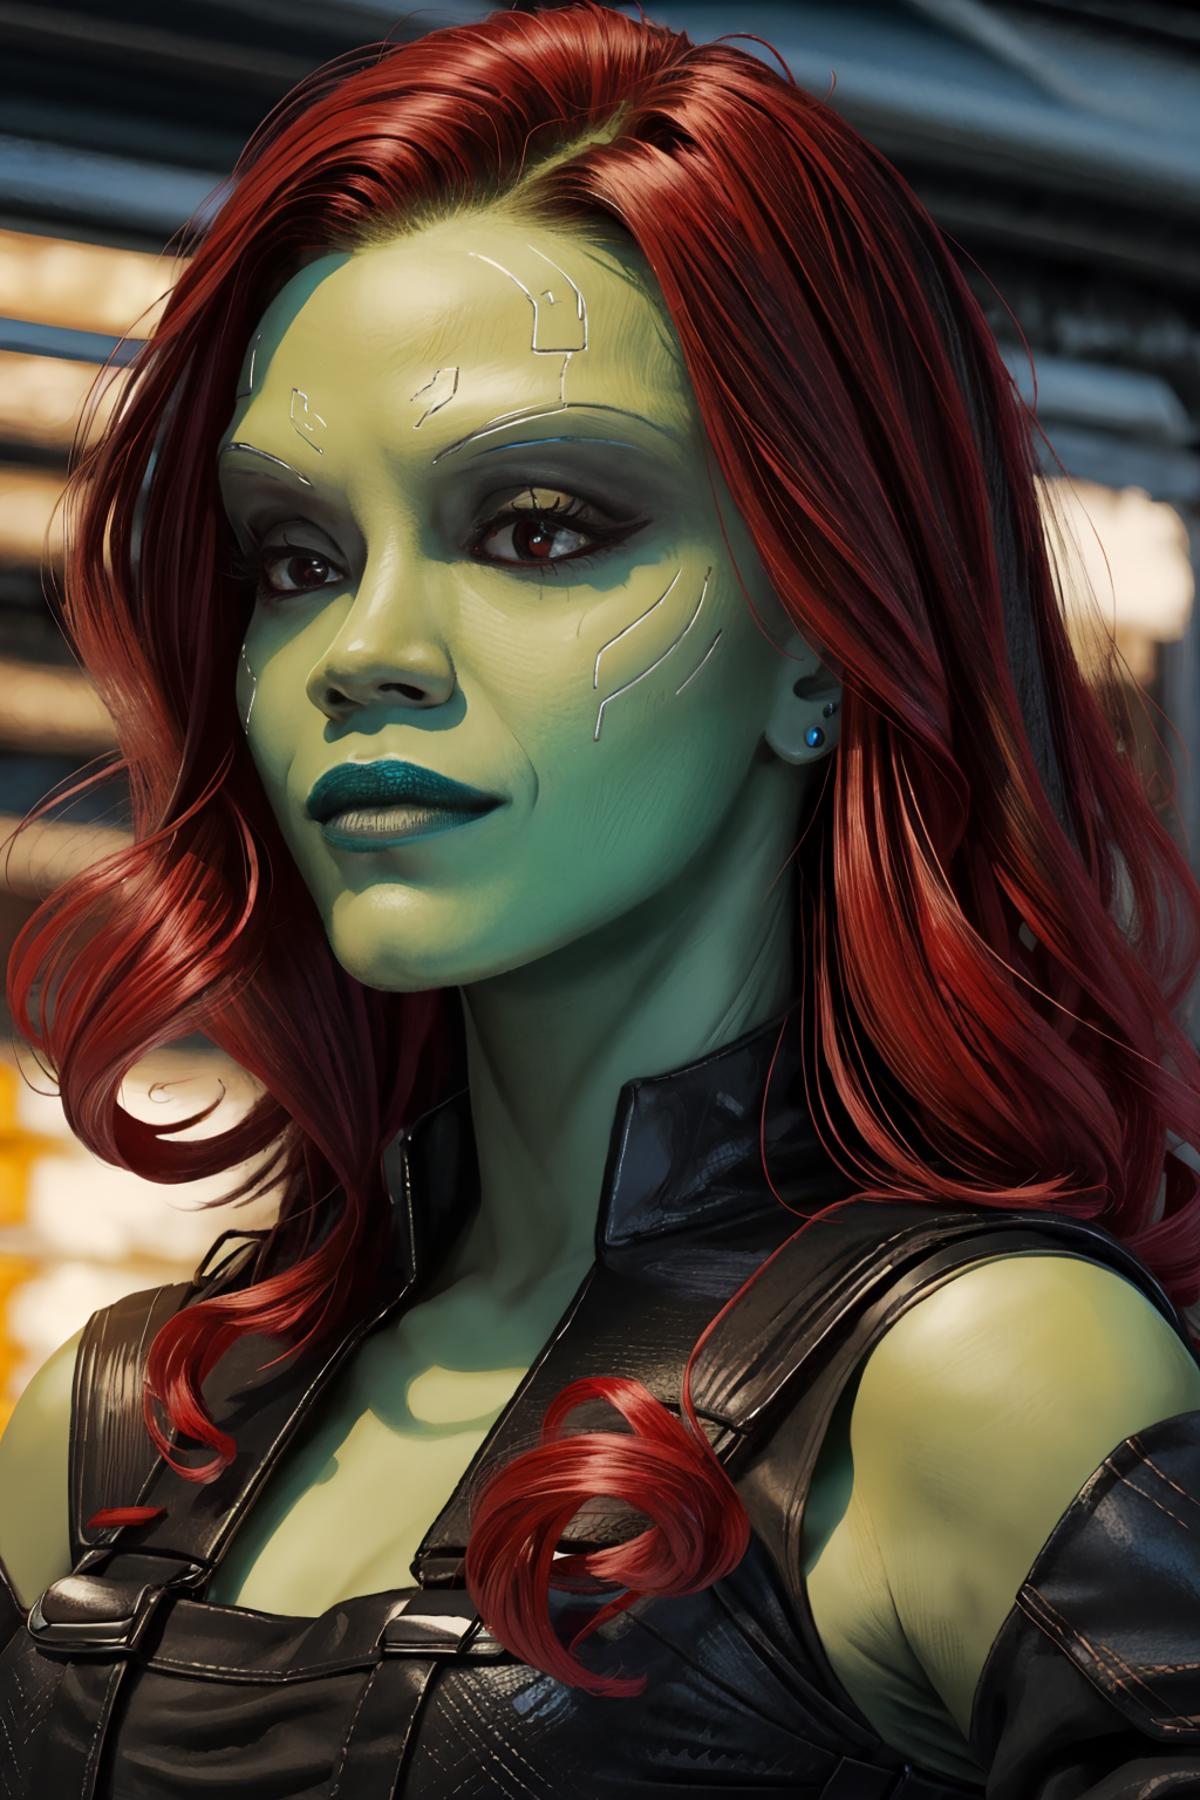 Zoe Saldana as Gamora from Guardians of the Galaxy (Lora) image by BoomAi